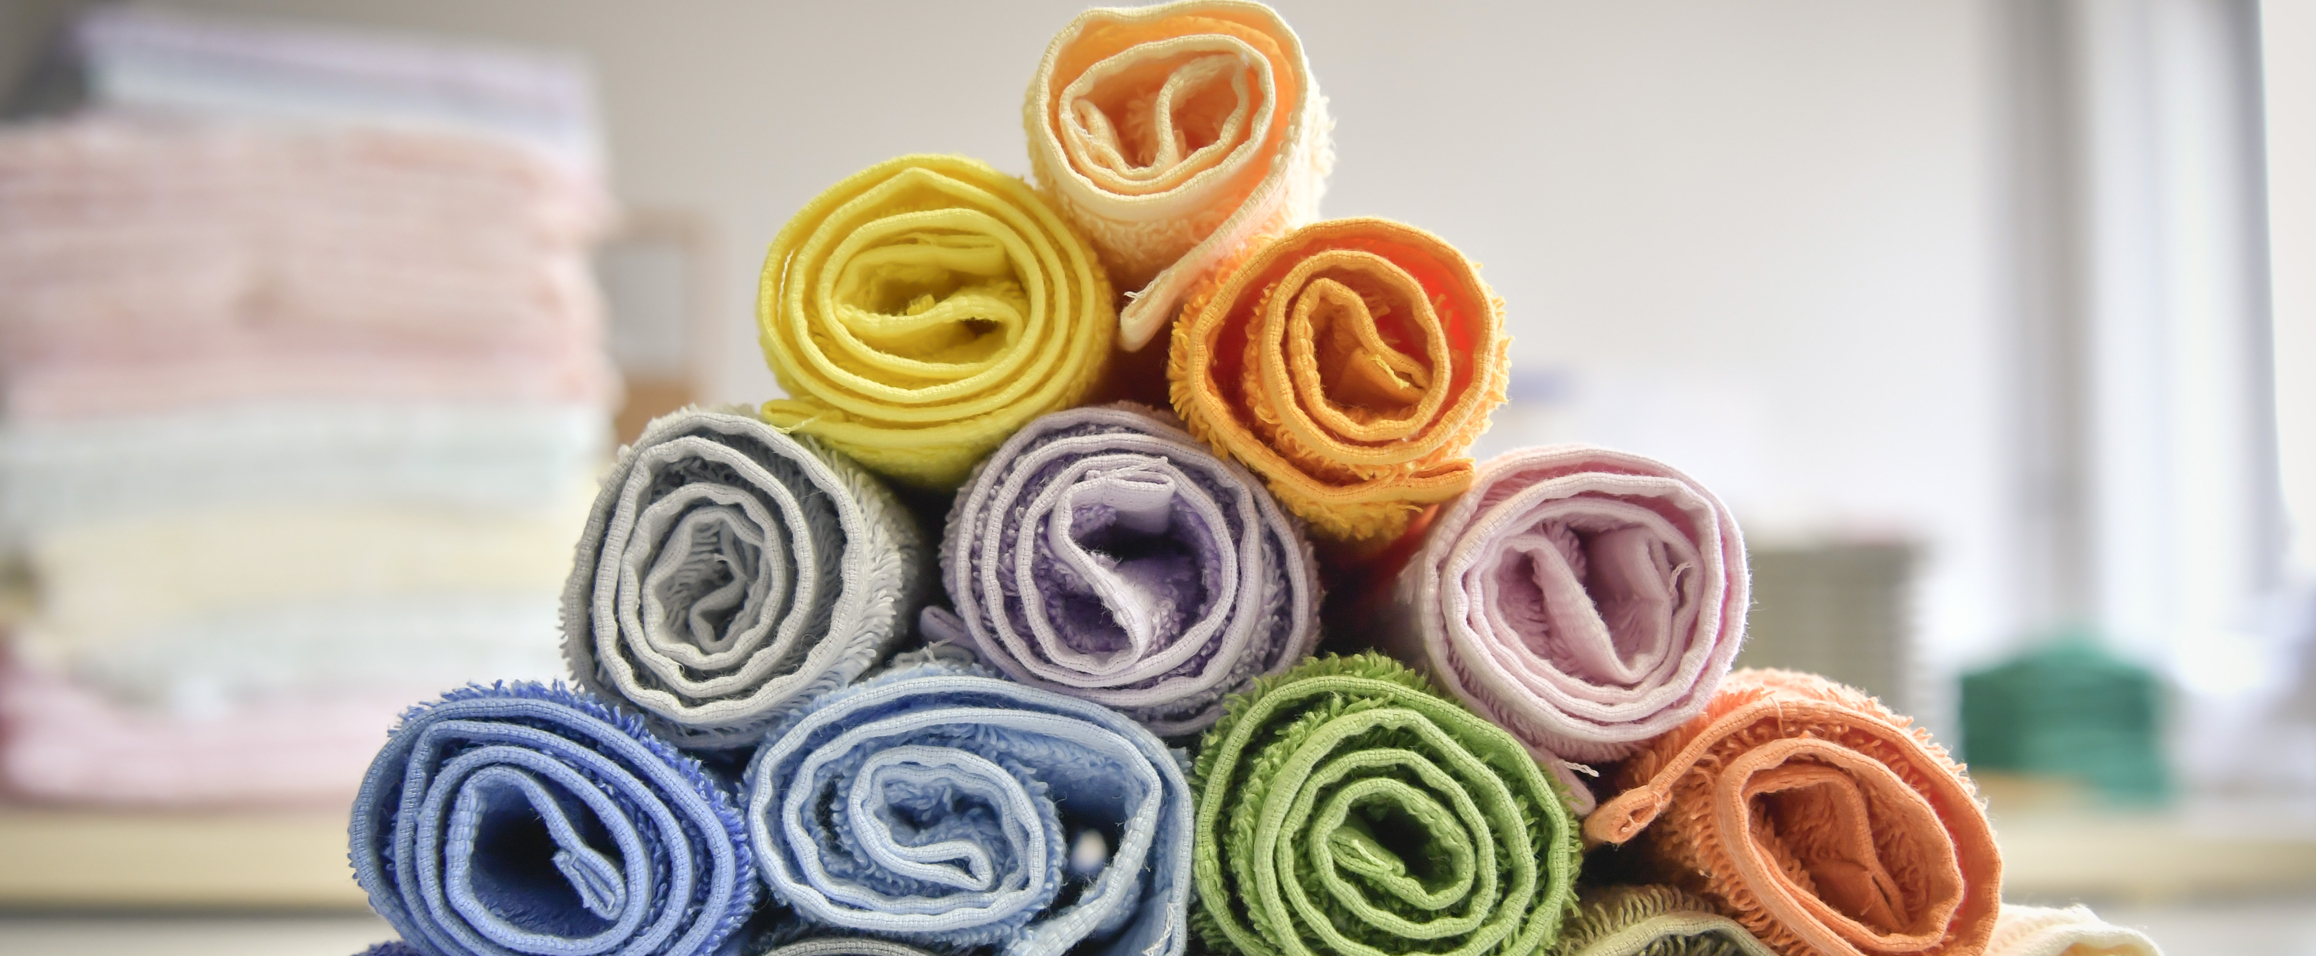 Handtuch bunte Rollen Dreieck Vielfalt Herka-Frottier cotton terry towel colorful